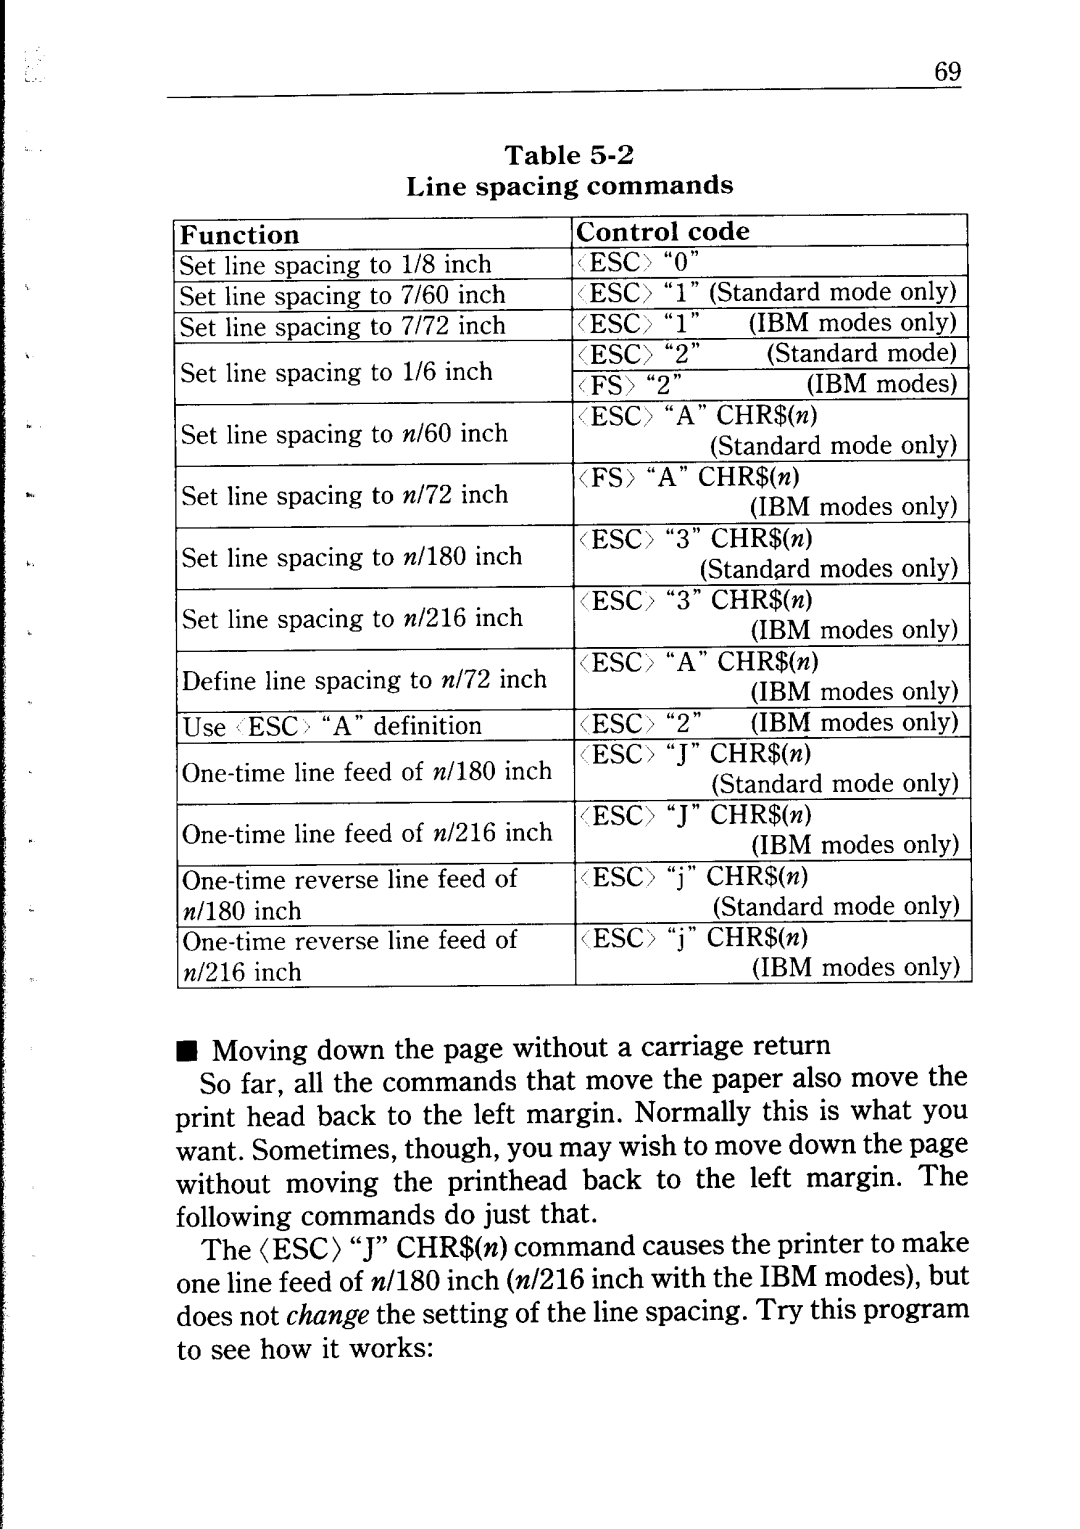 Star Micronics NB24-10/15 user manual One-timelinefeedof .-,Ion I--L, I’ESC “J” C”‘n 